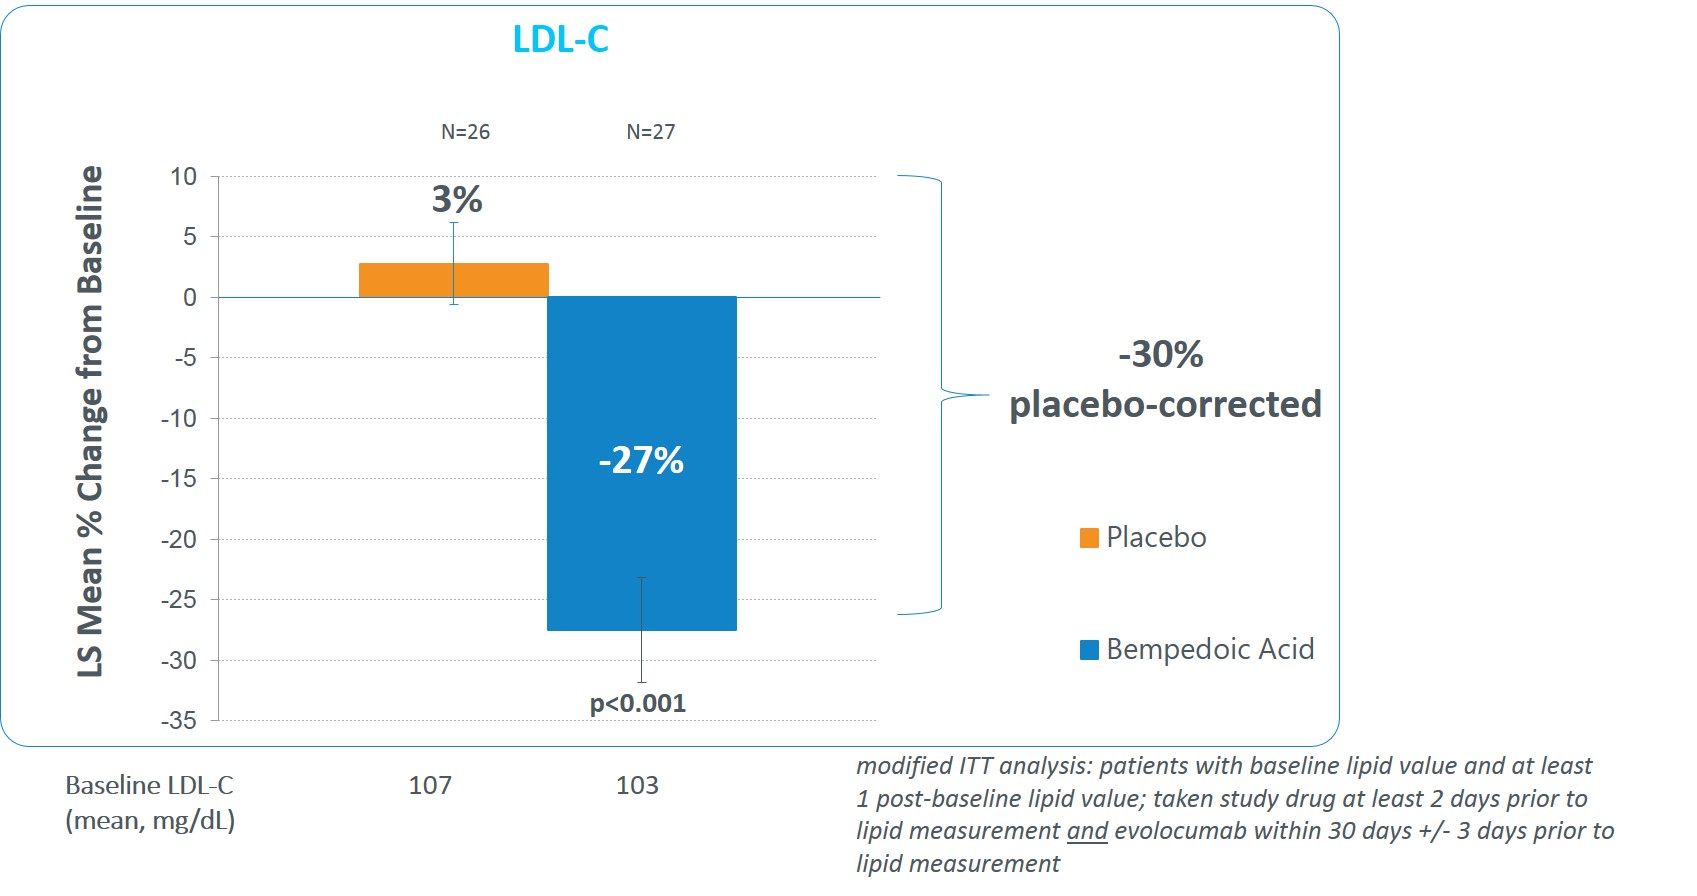 1002-039 Phase 2 Add-on to PCSK9i - LDL-C Percent Change